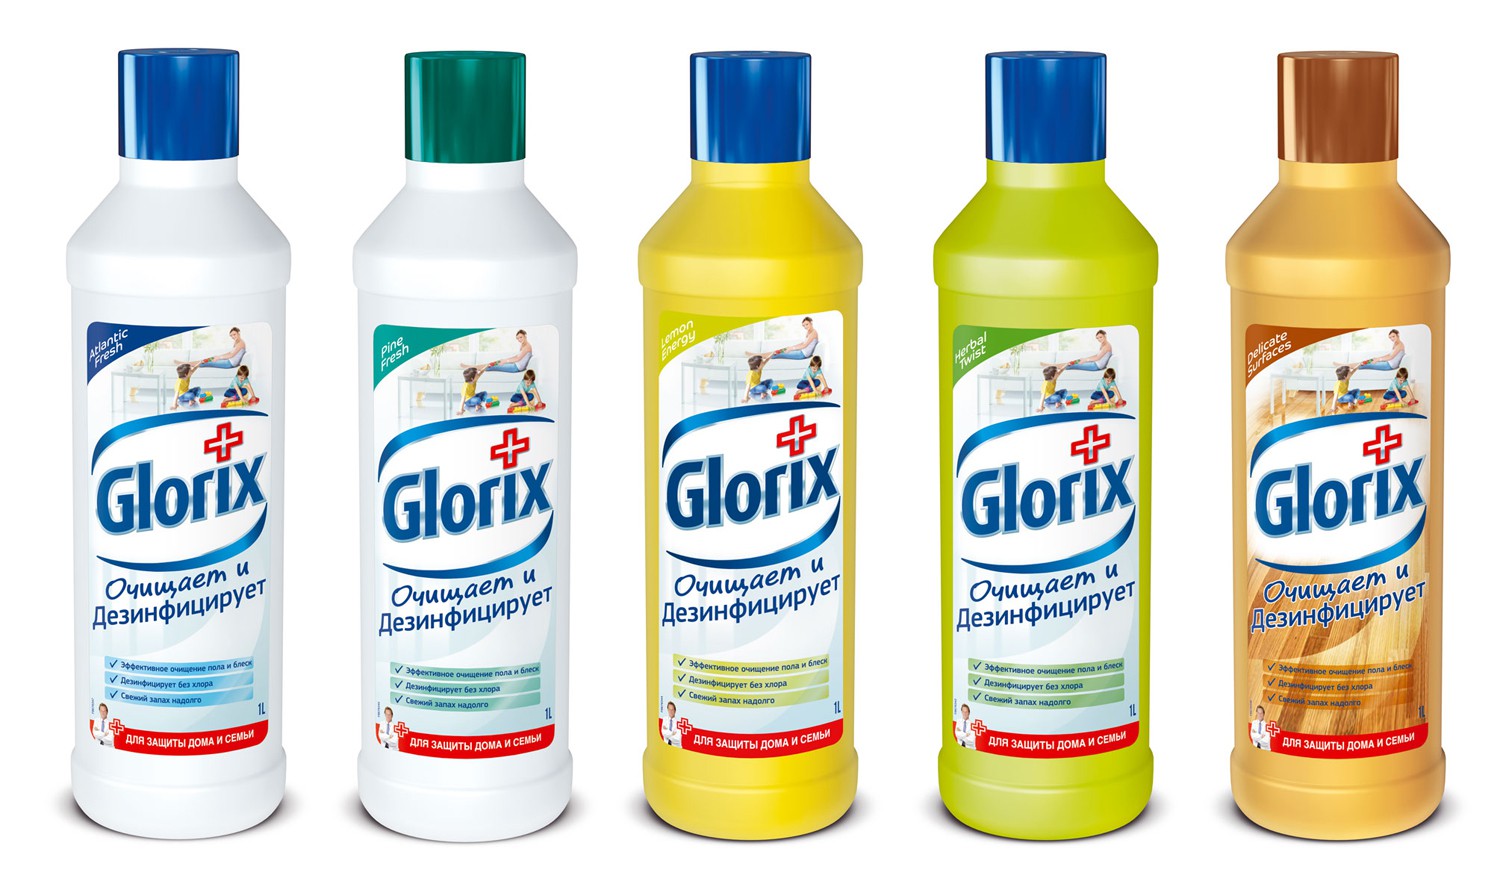 Glorix, Unilever